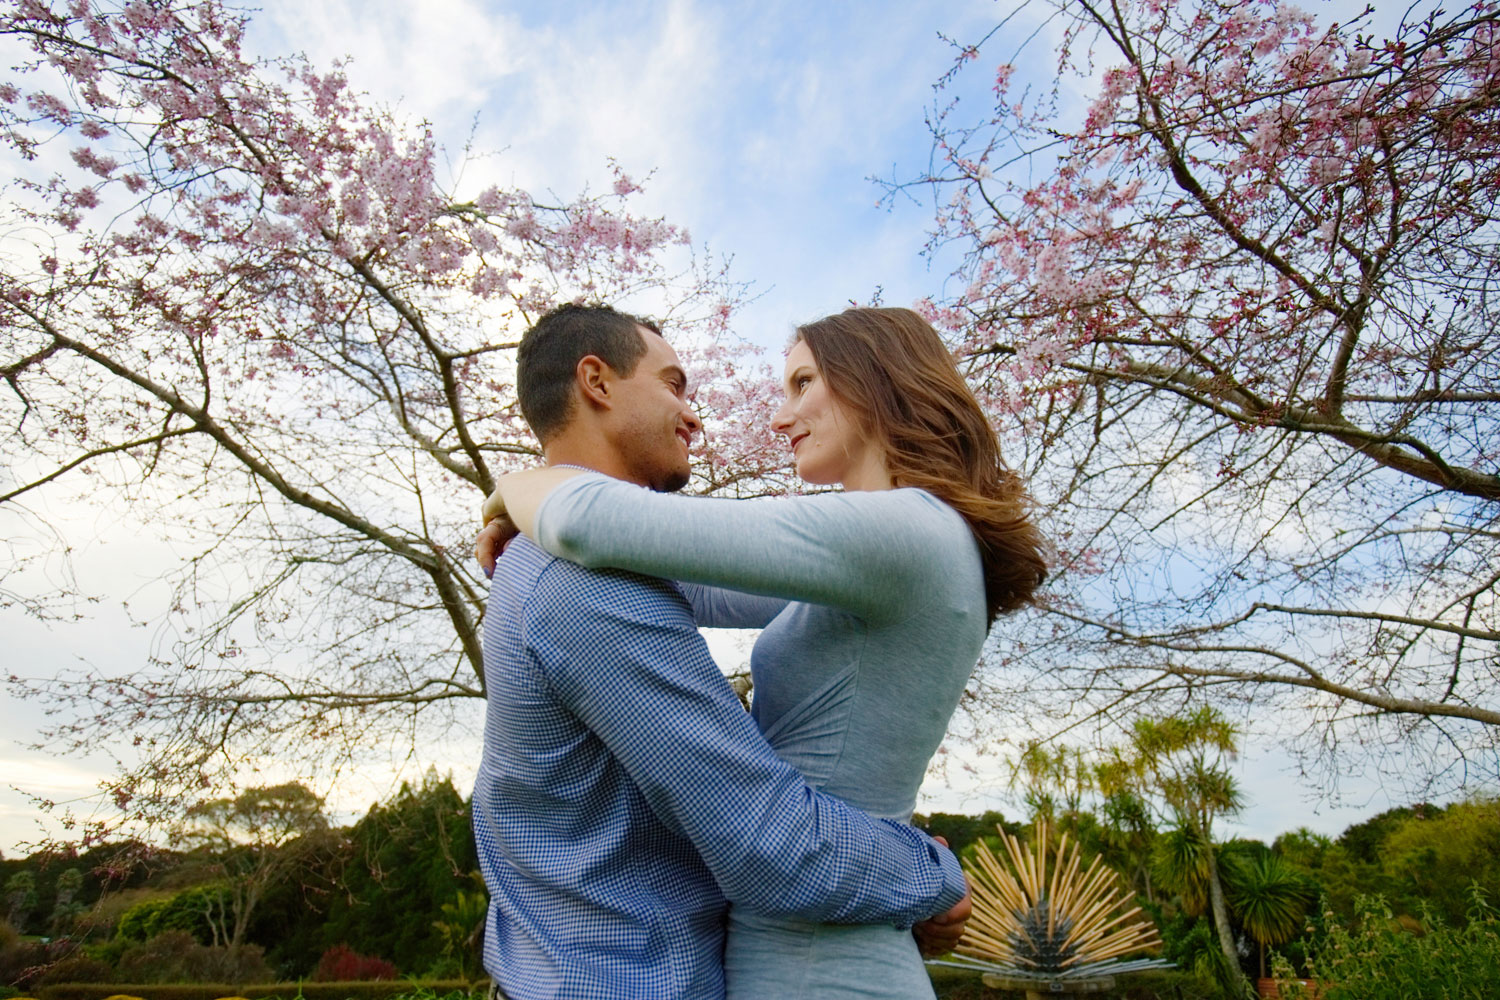 auckland botanic gardens engagement photo couple under cherry blossoms